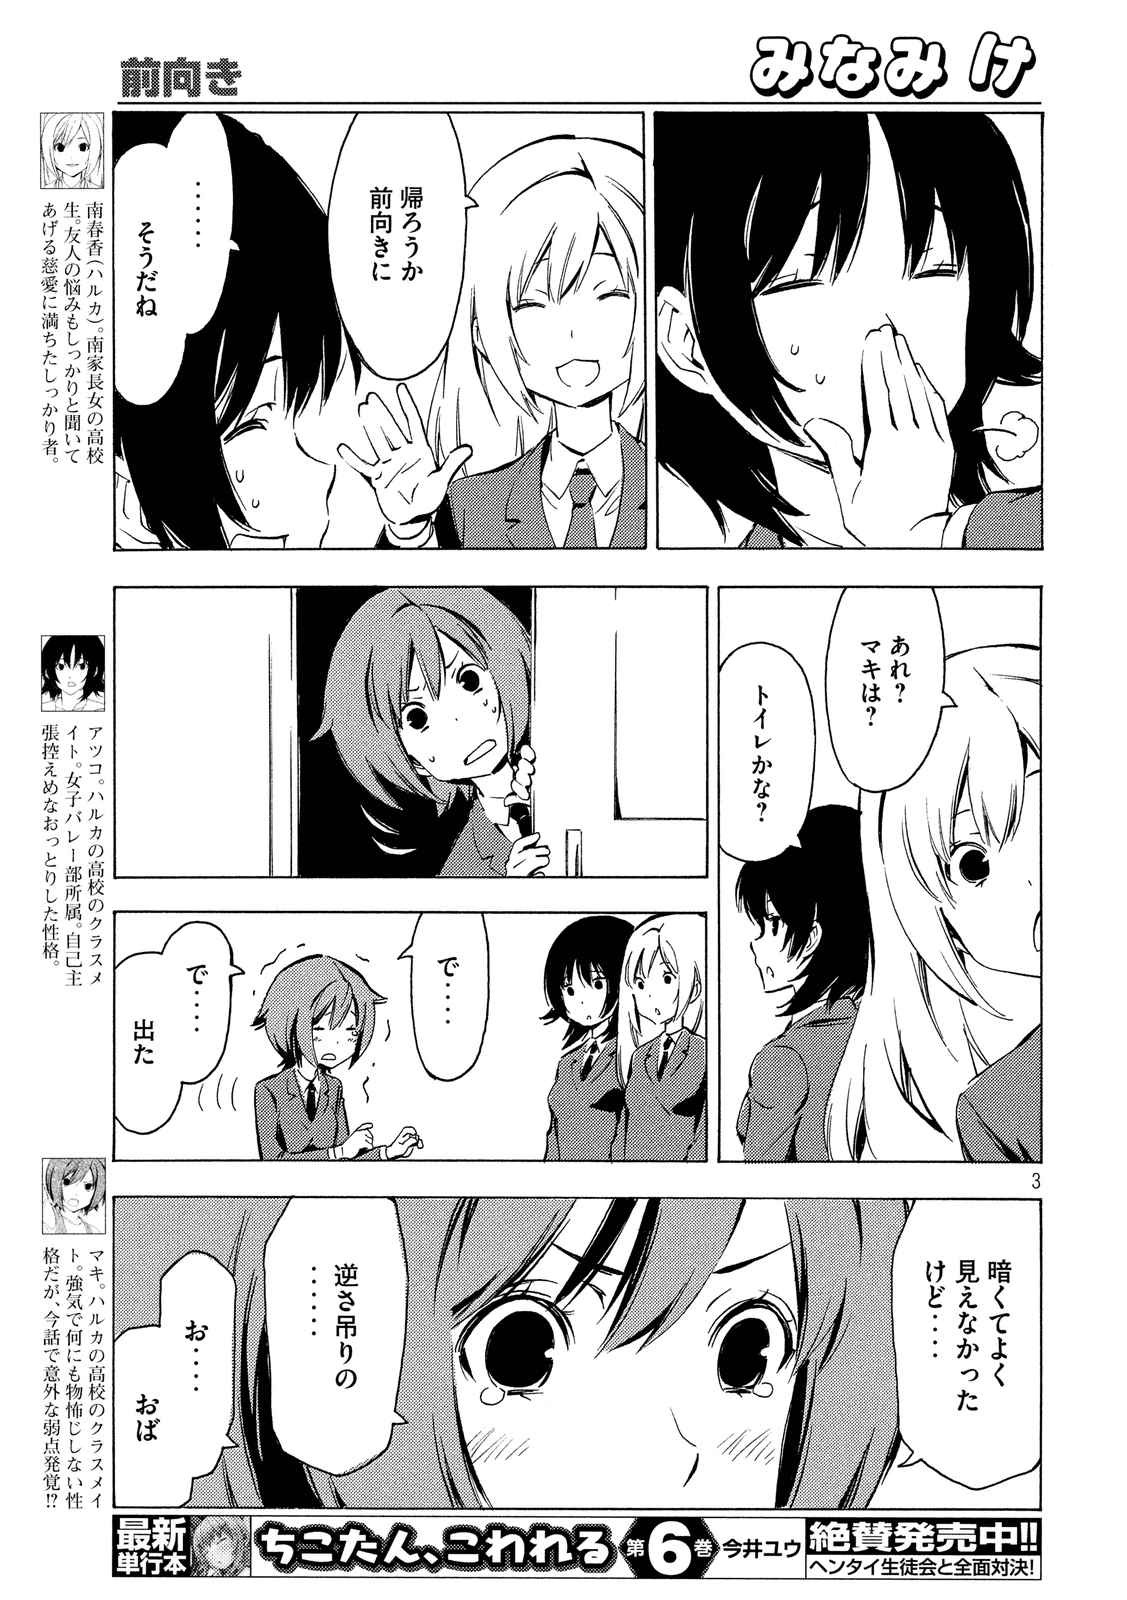 Minami-ke - Chapter 309 - Page 3